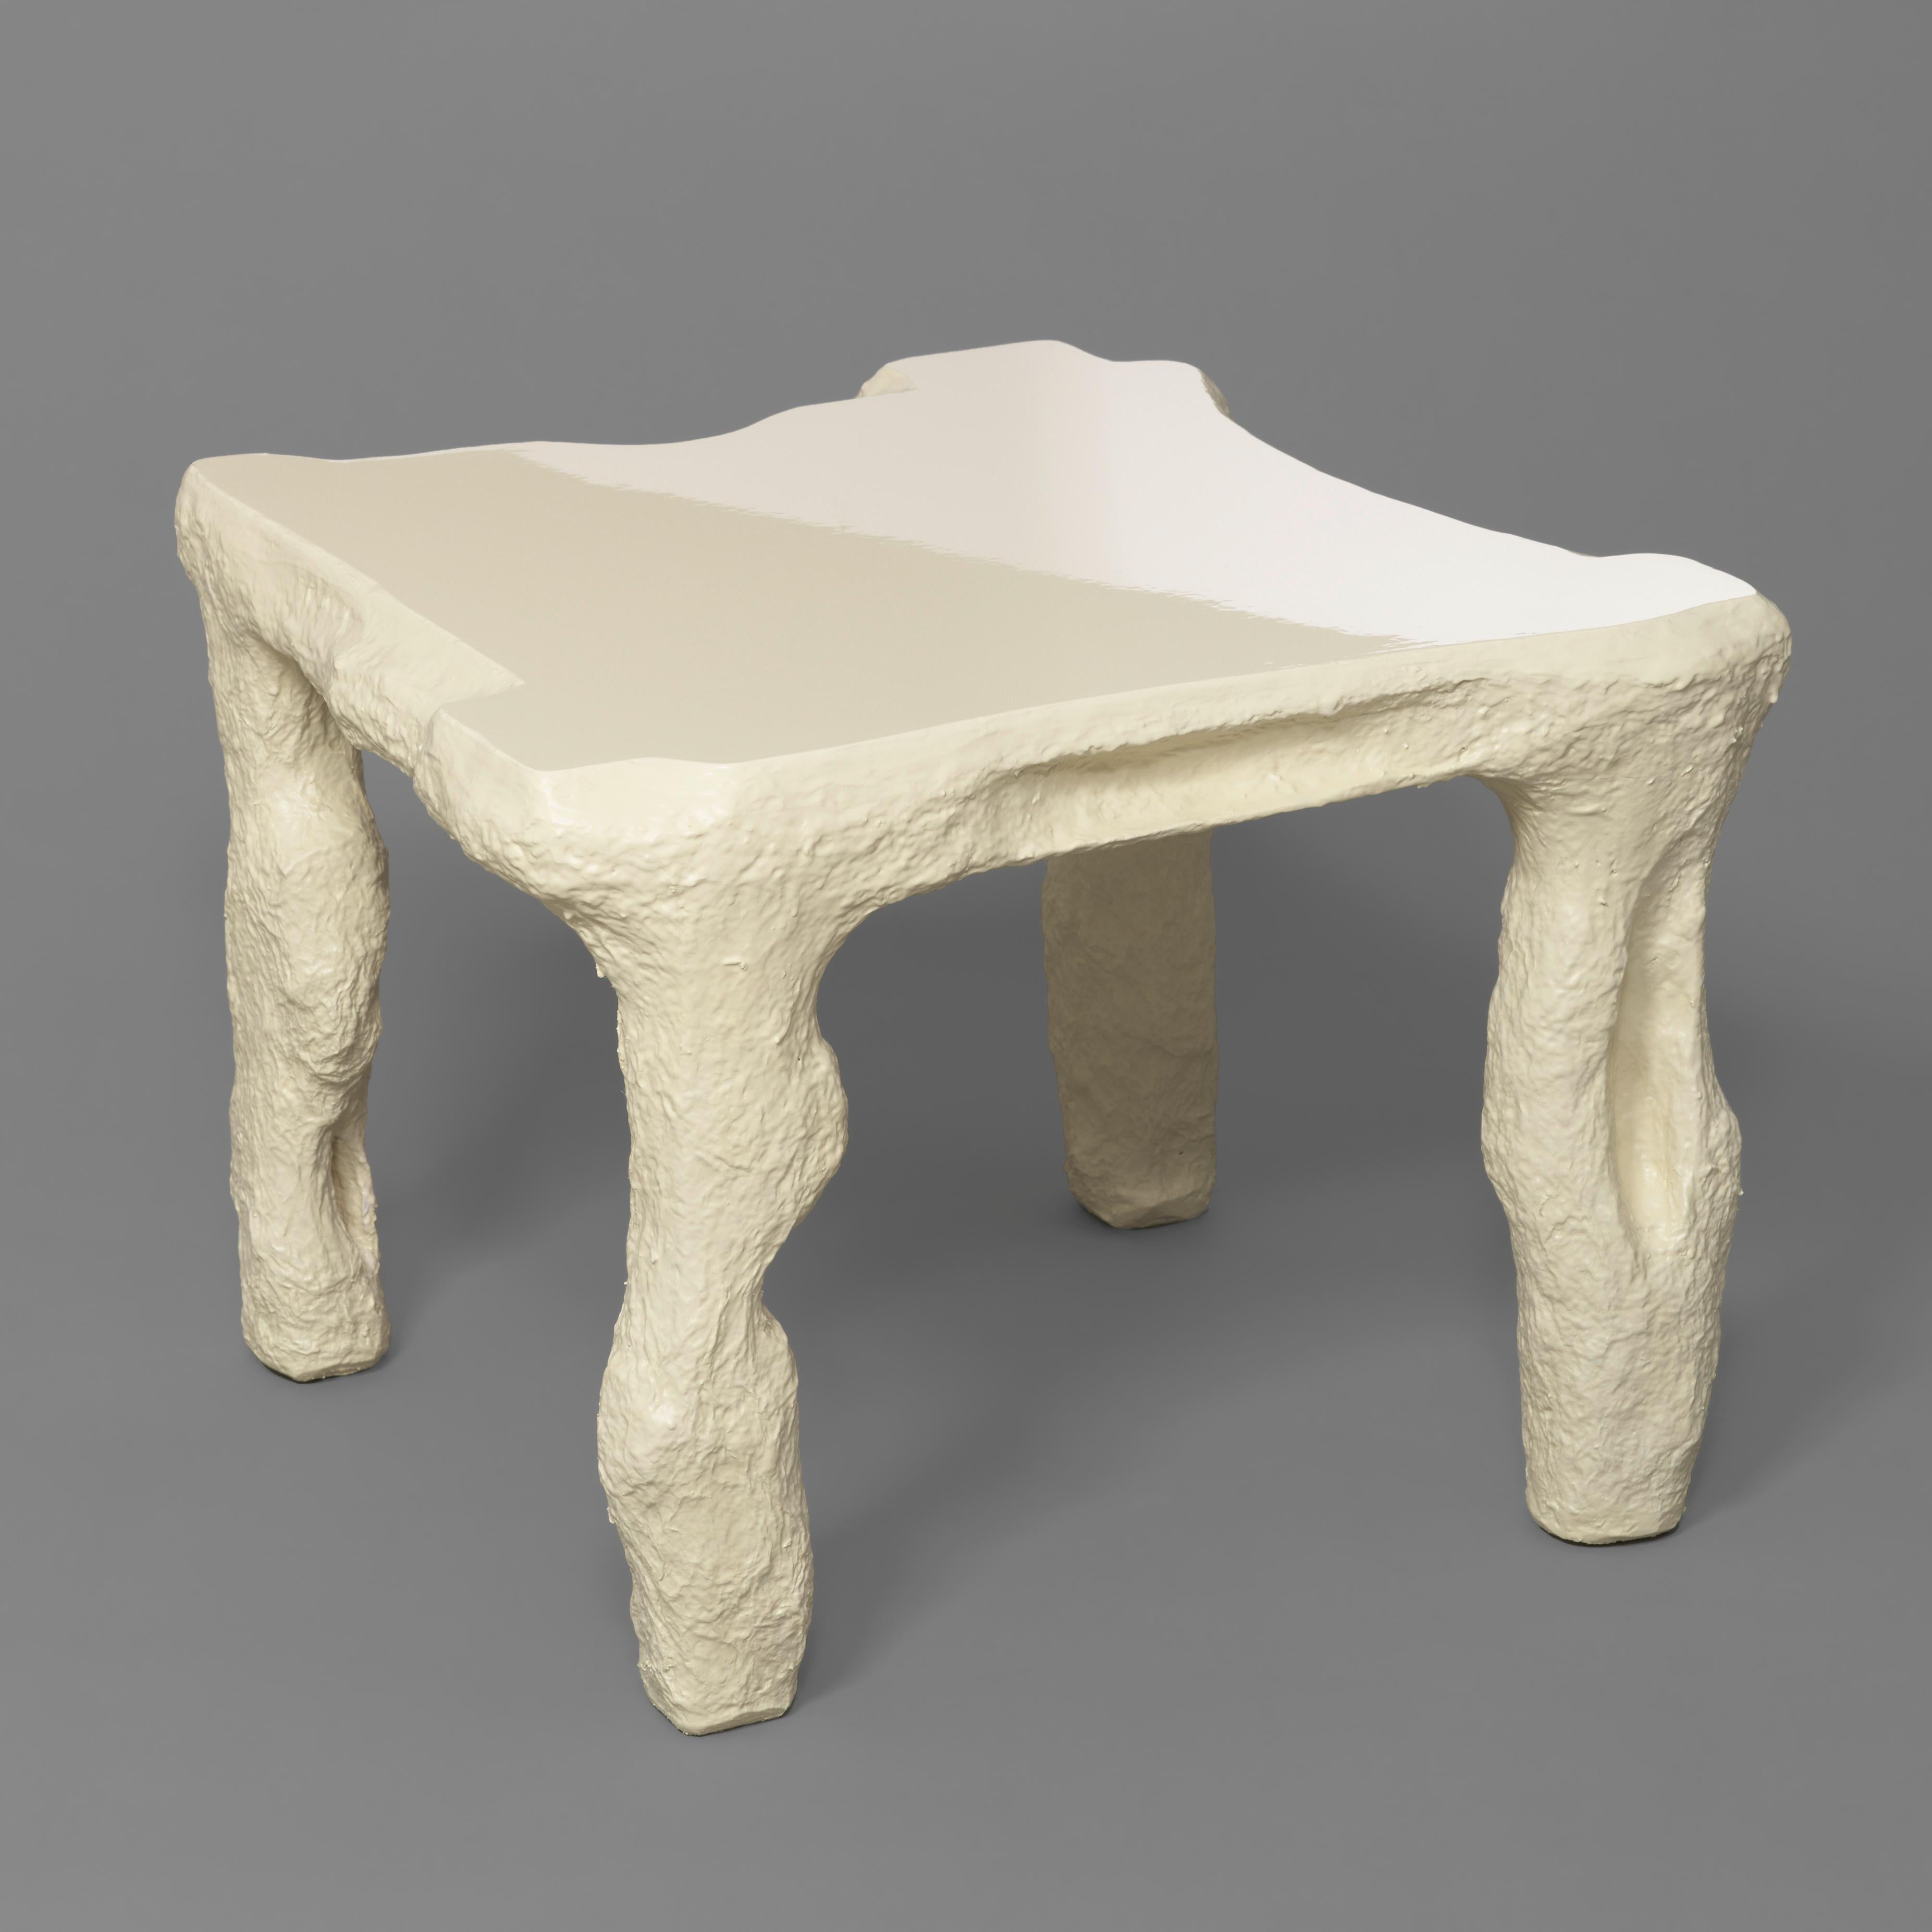 Reversed process table by Philipp Aduatz
Reversed process furniture
Unique
2014
Dimensions: 60 x 65 x 47 cm
Materials: Wood, metal, polystyrene-foam, 